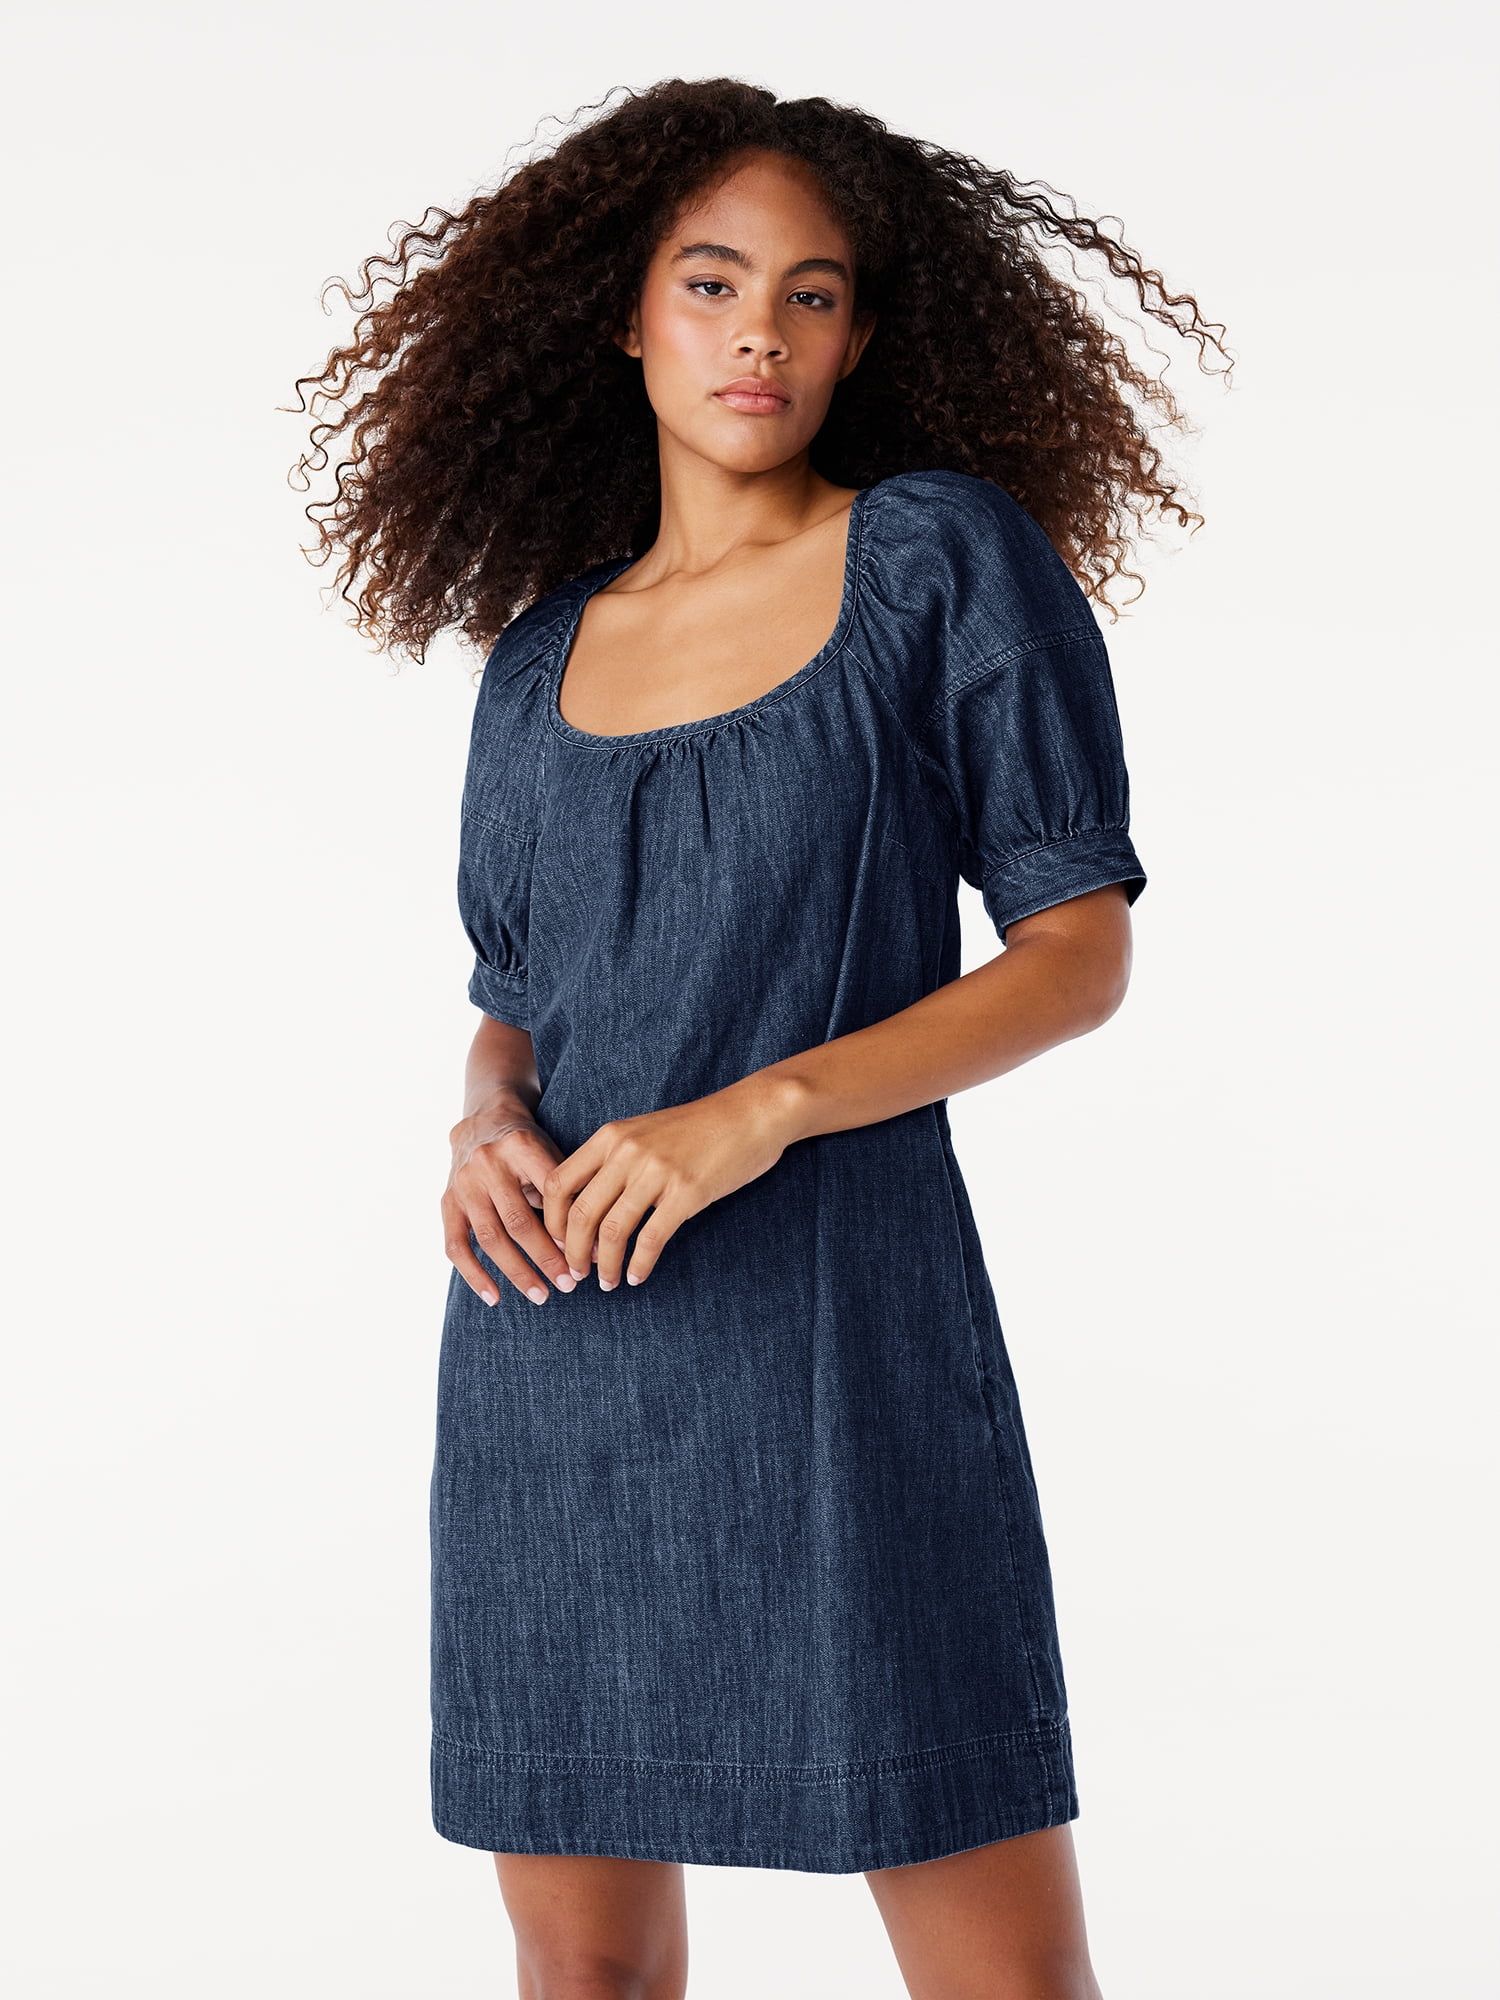 Free Assembly Women's Square Neck Denim Mini Dress with Puff Sleeves, Sizes XS-XXL | Walmart (US)